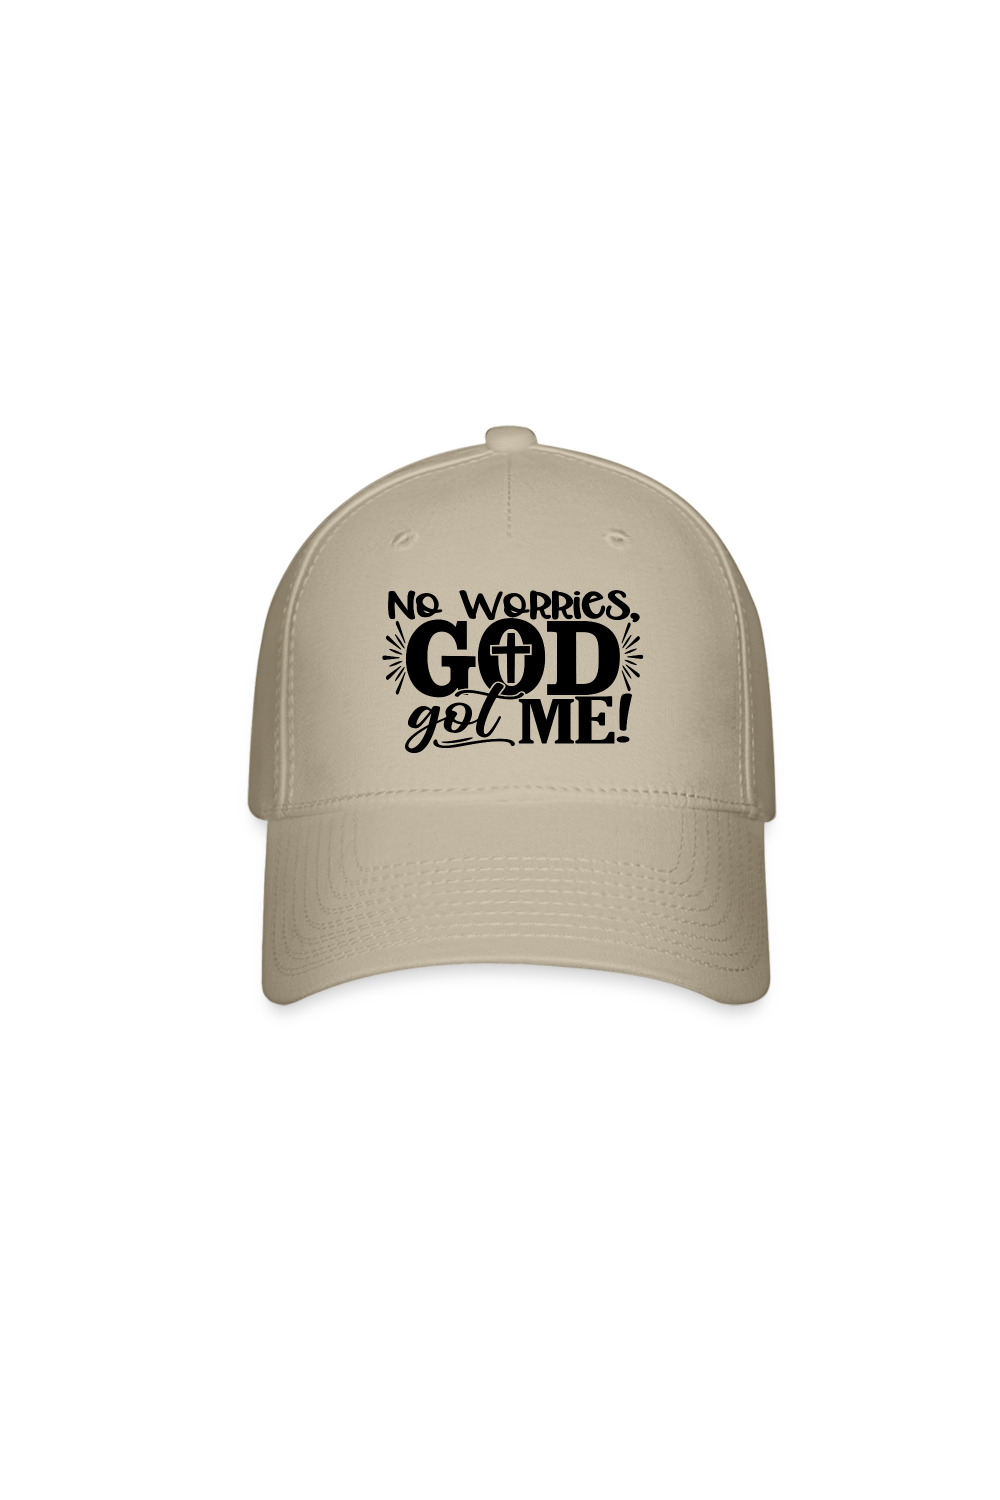 Unisex Adult God Got Me Baseball Cap - khaki - NicholesGifts.online